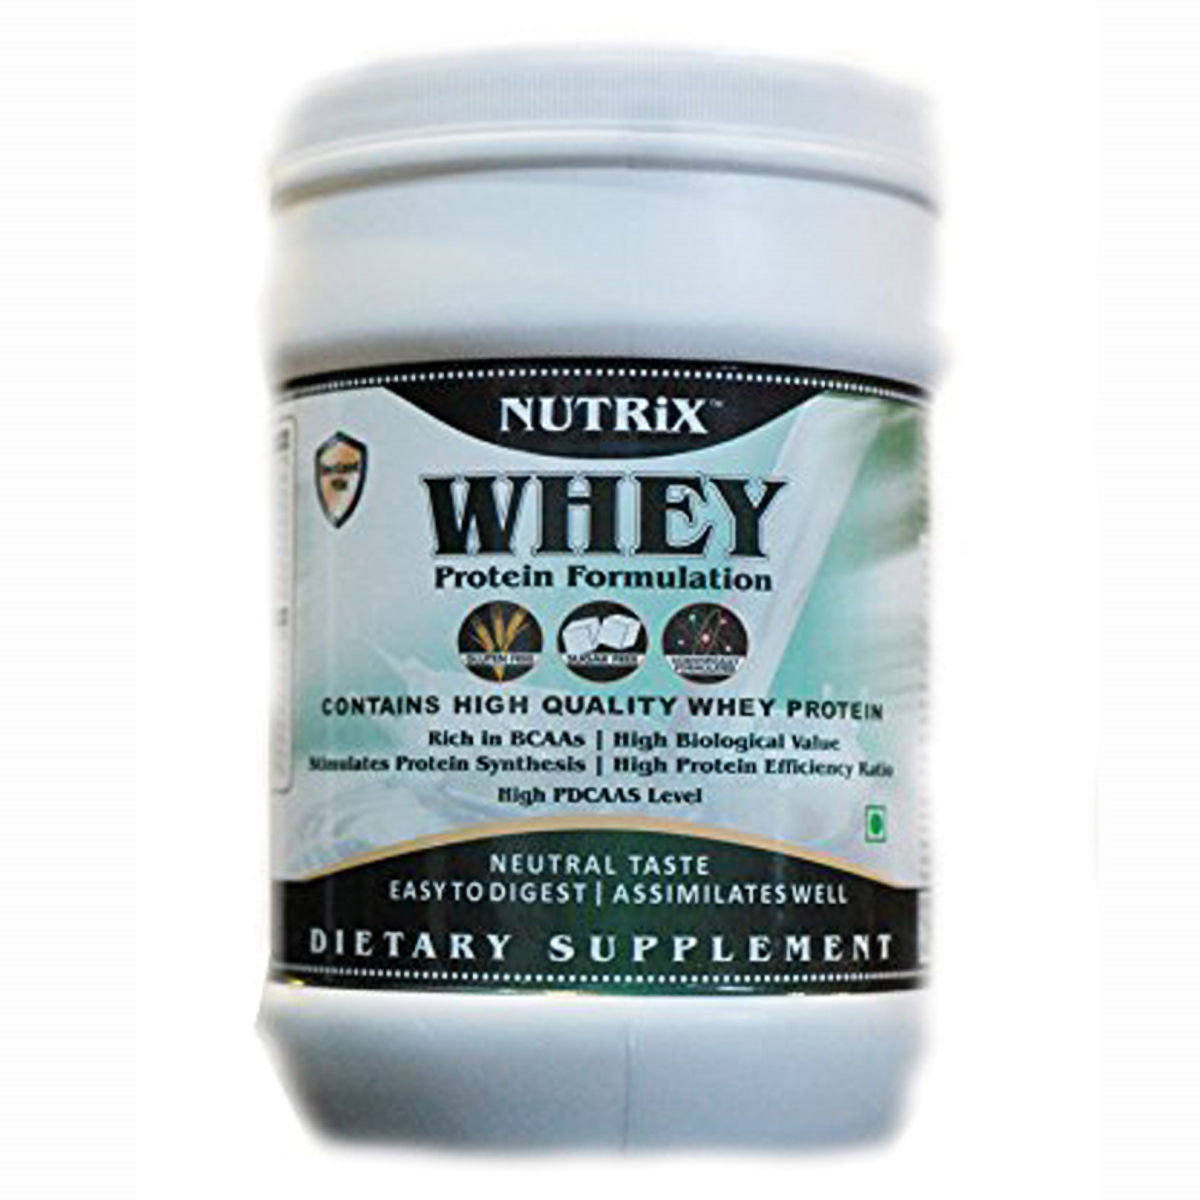 Buy Nutrix Whey Protein Powder, 1 kg Online